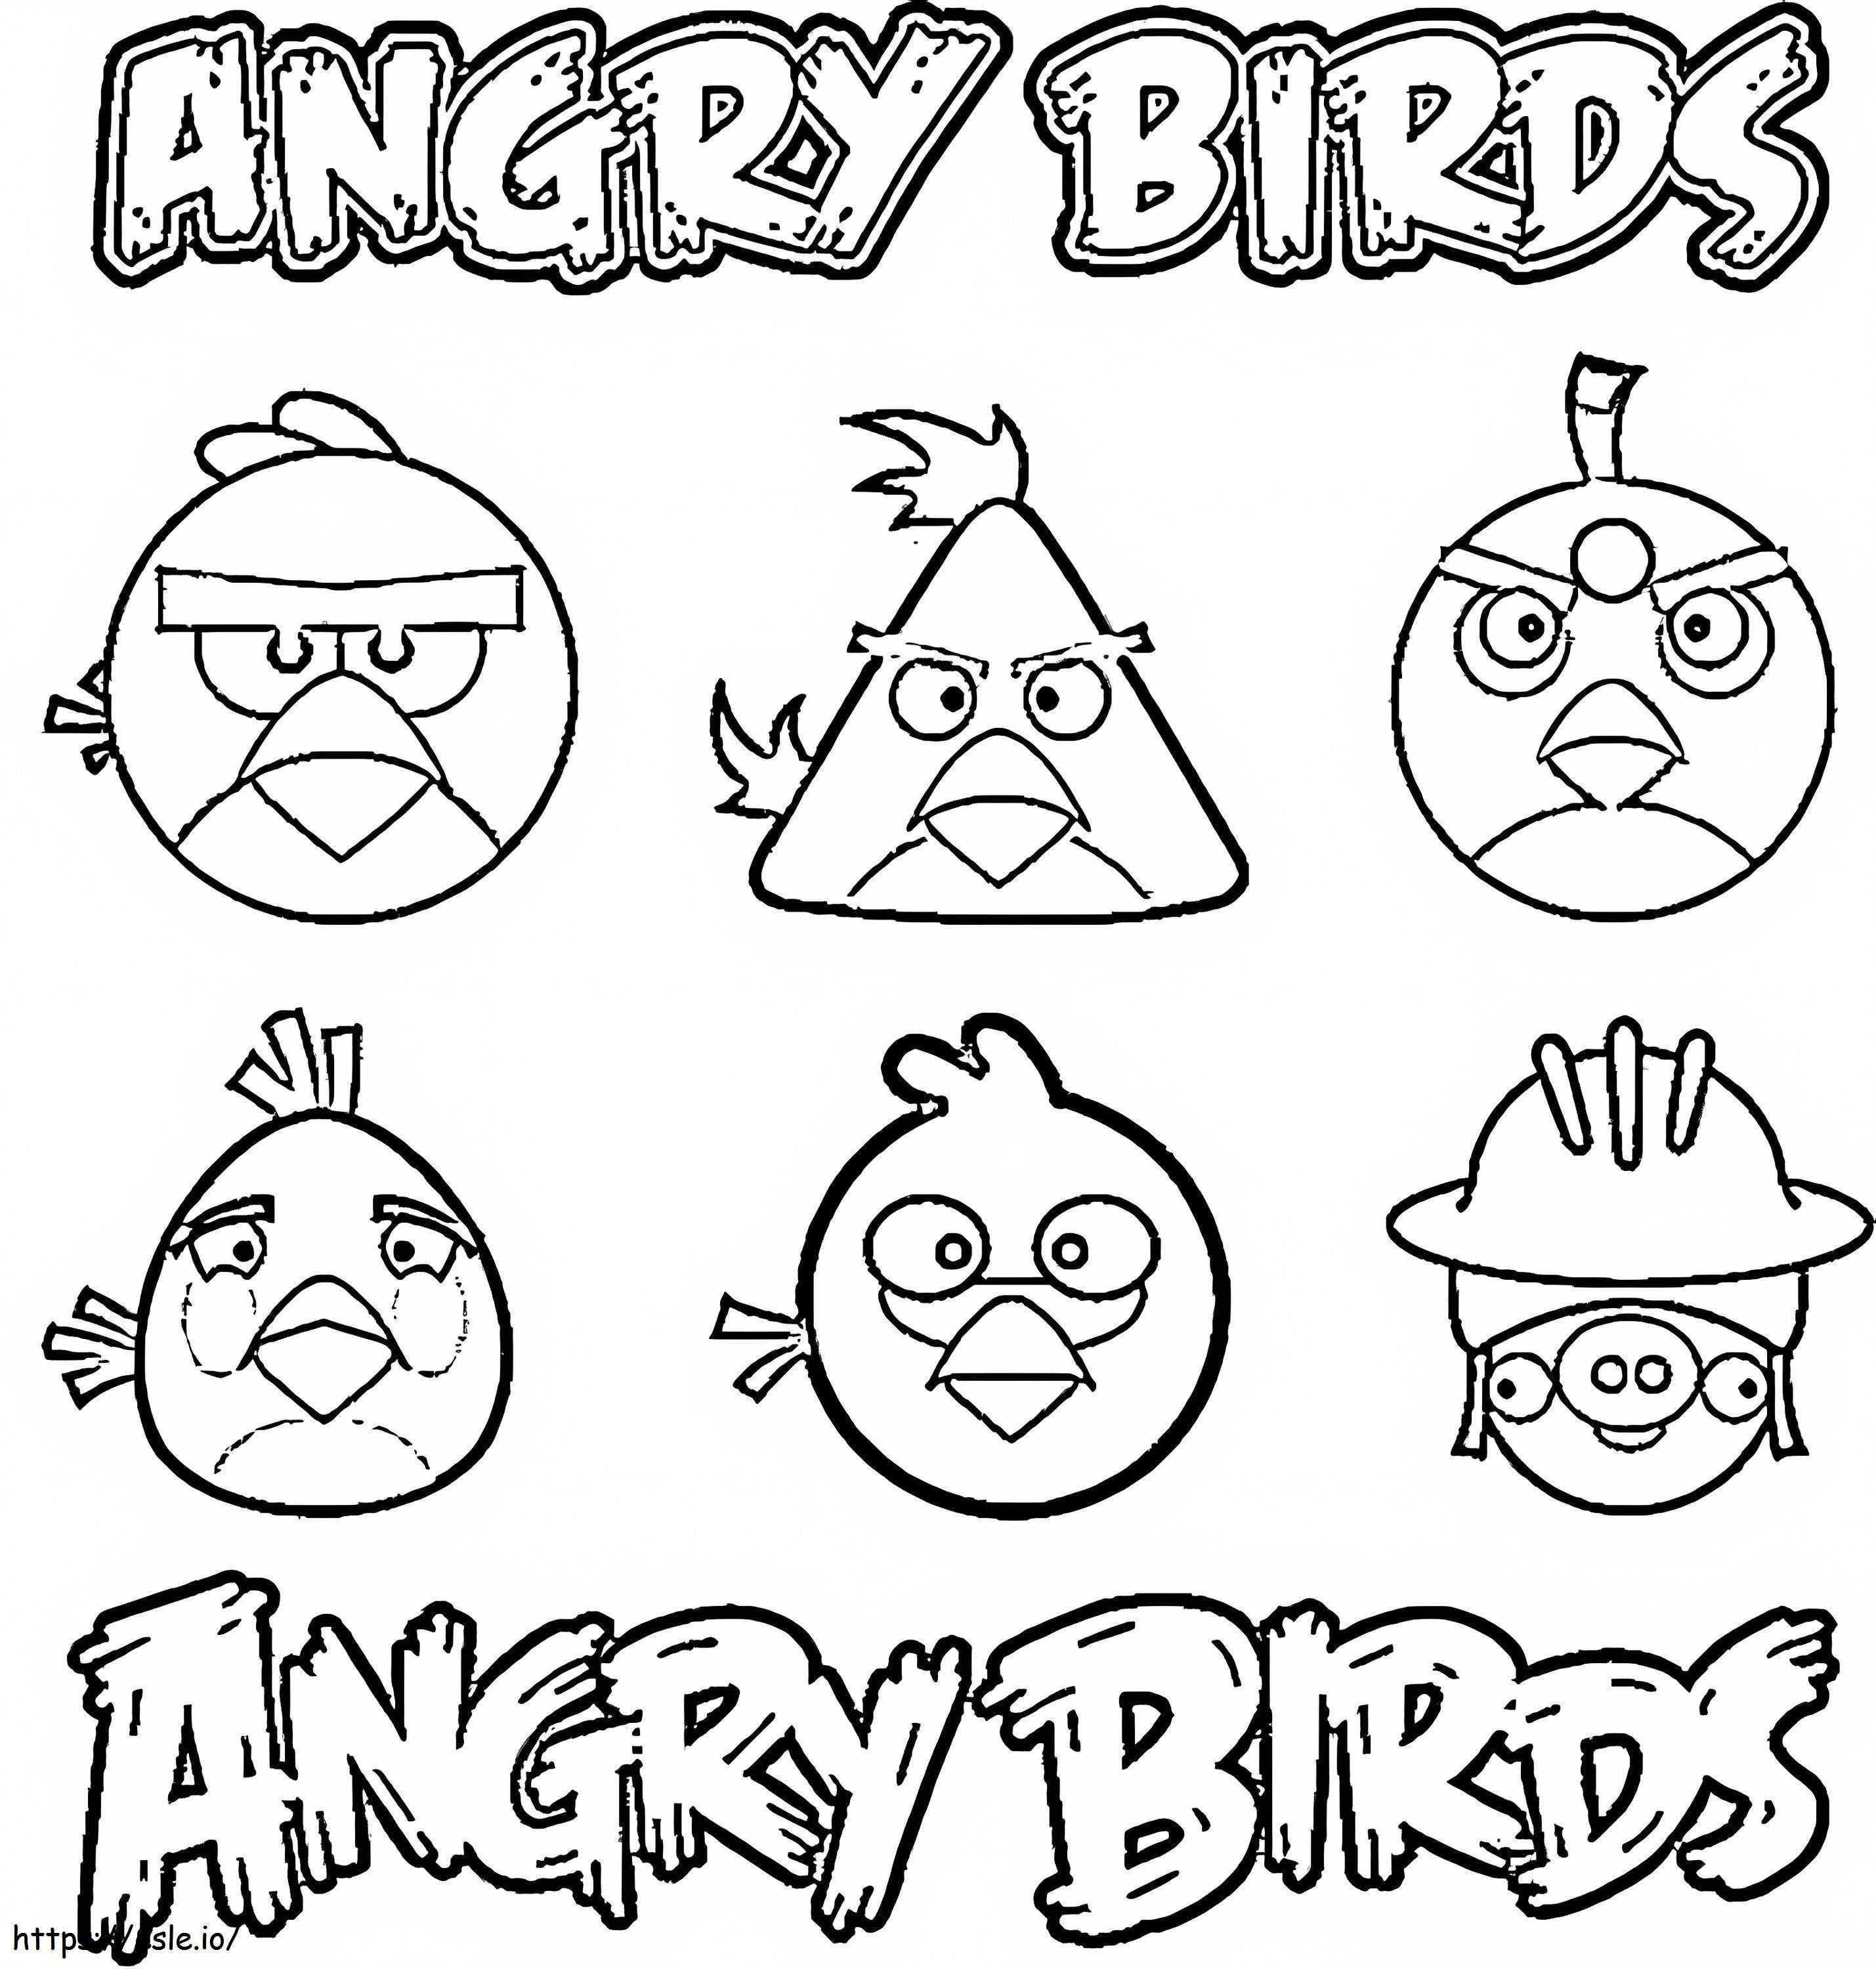 Angry Birds Basicos ausmalbilder